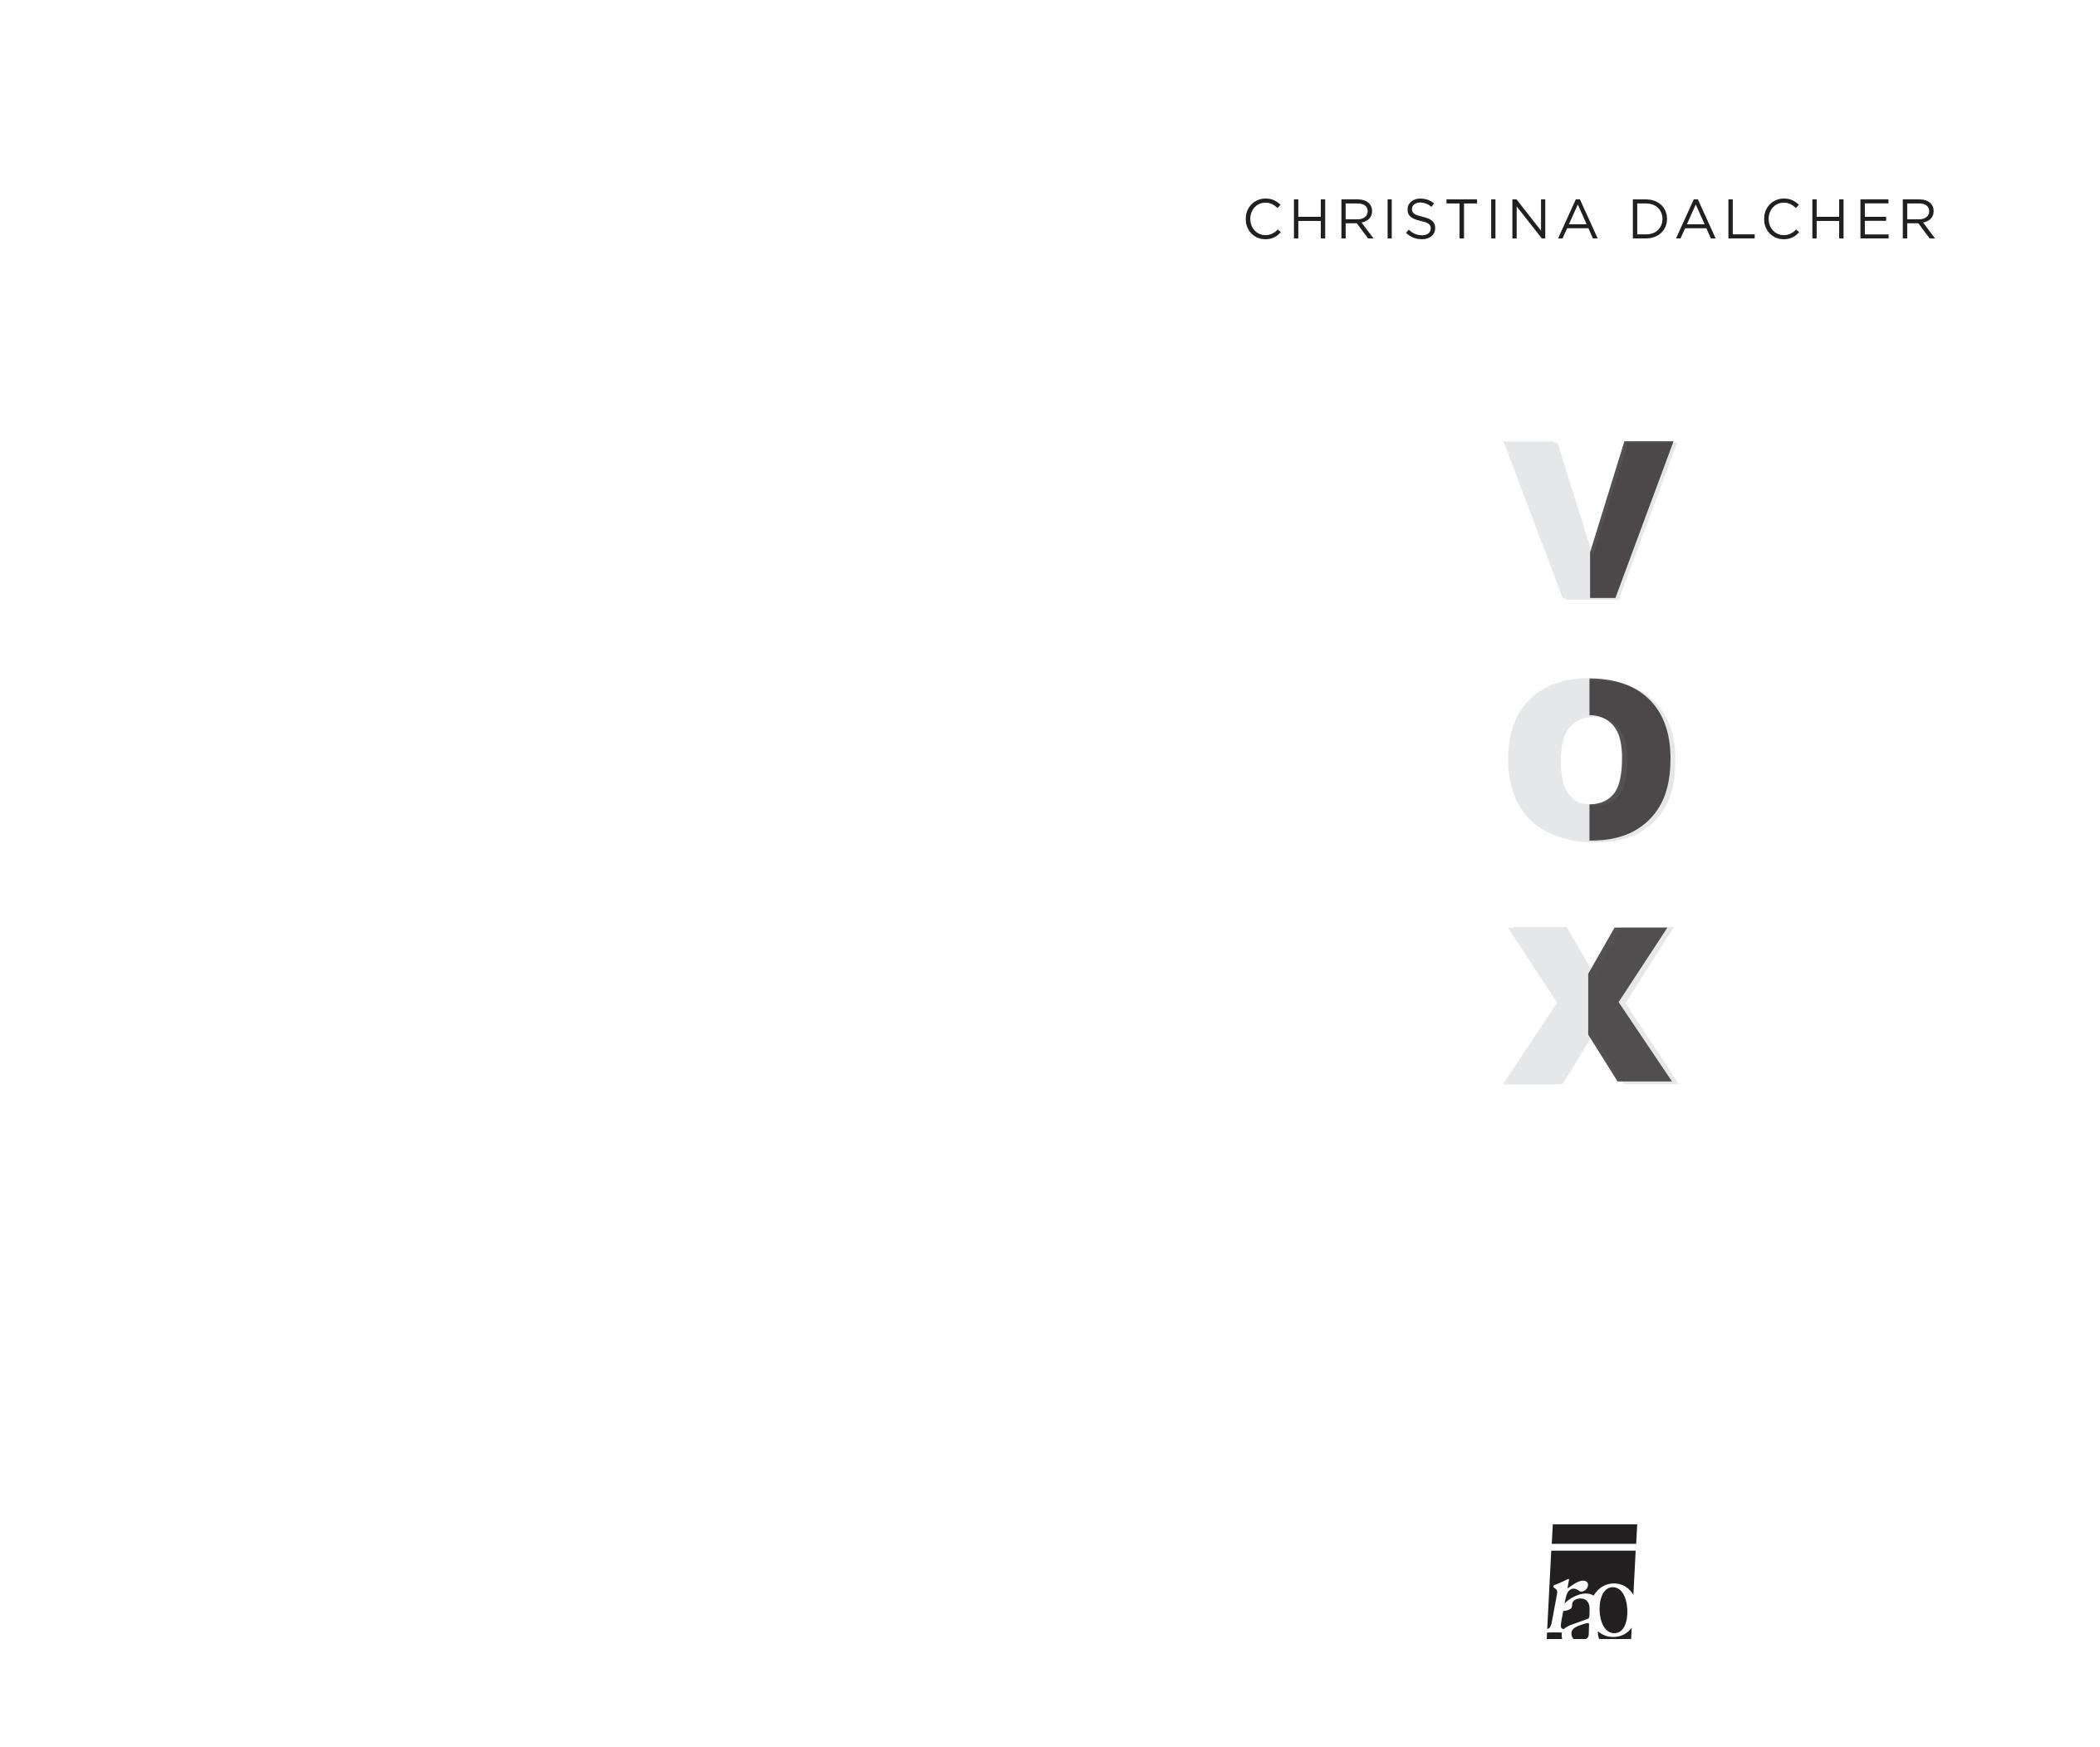 Vox. Tacerea foate fi asurzitoare | Christina Dalcher - 6